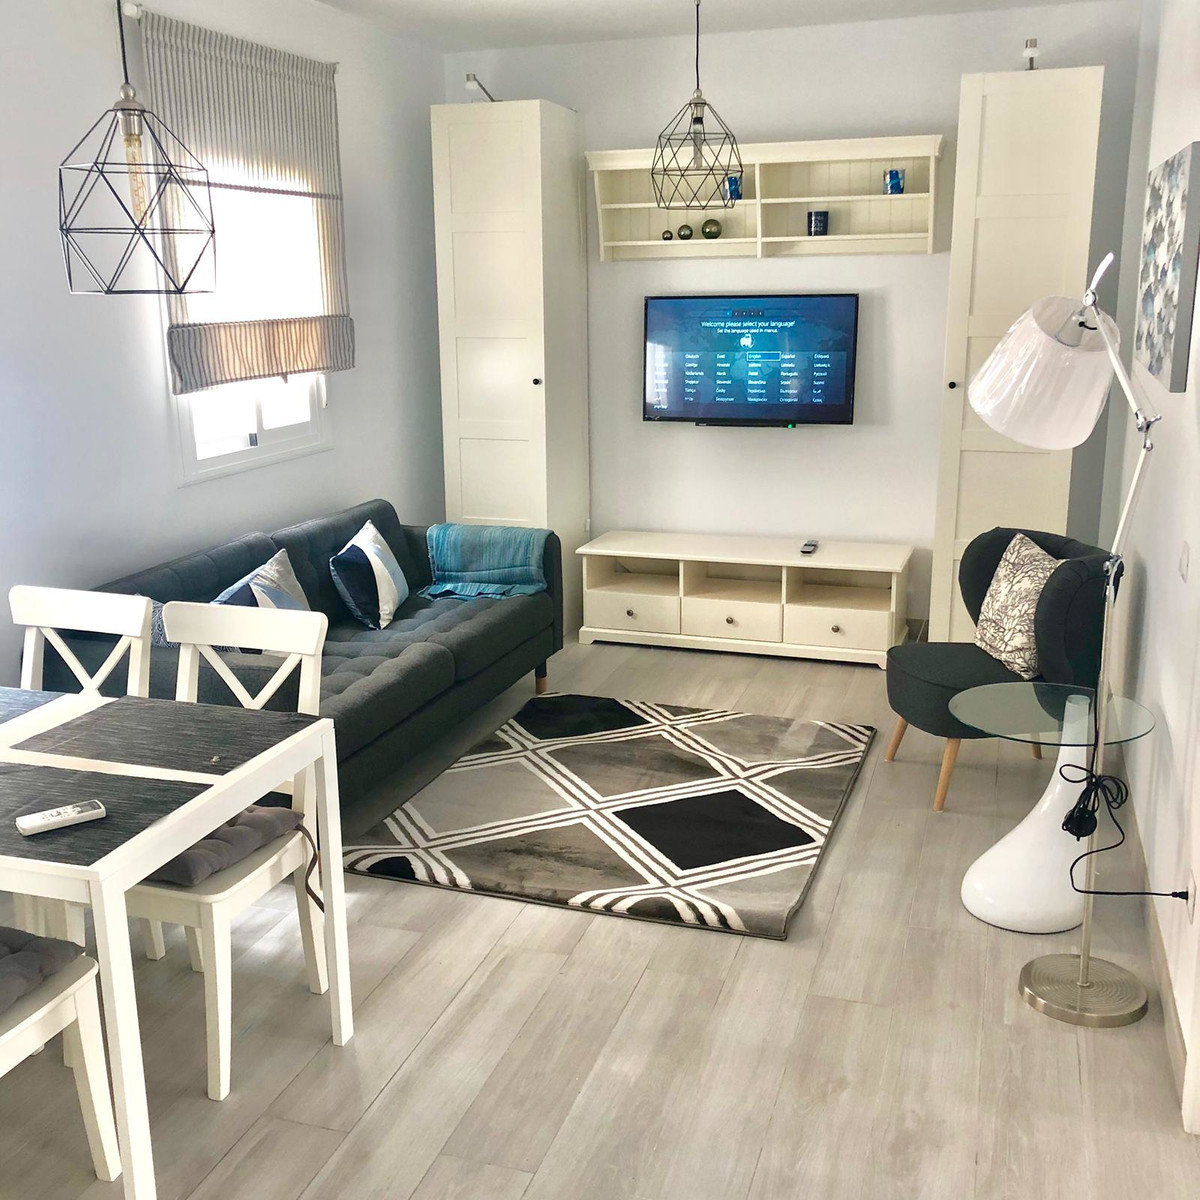 2 bedrooms Apartment in Estepona